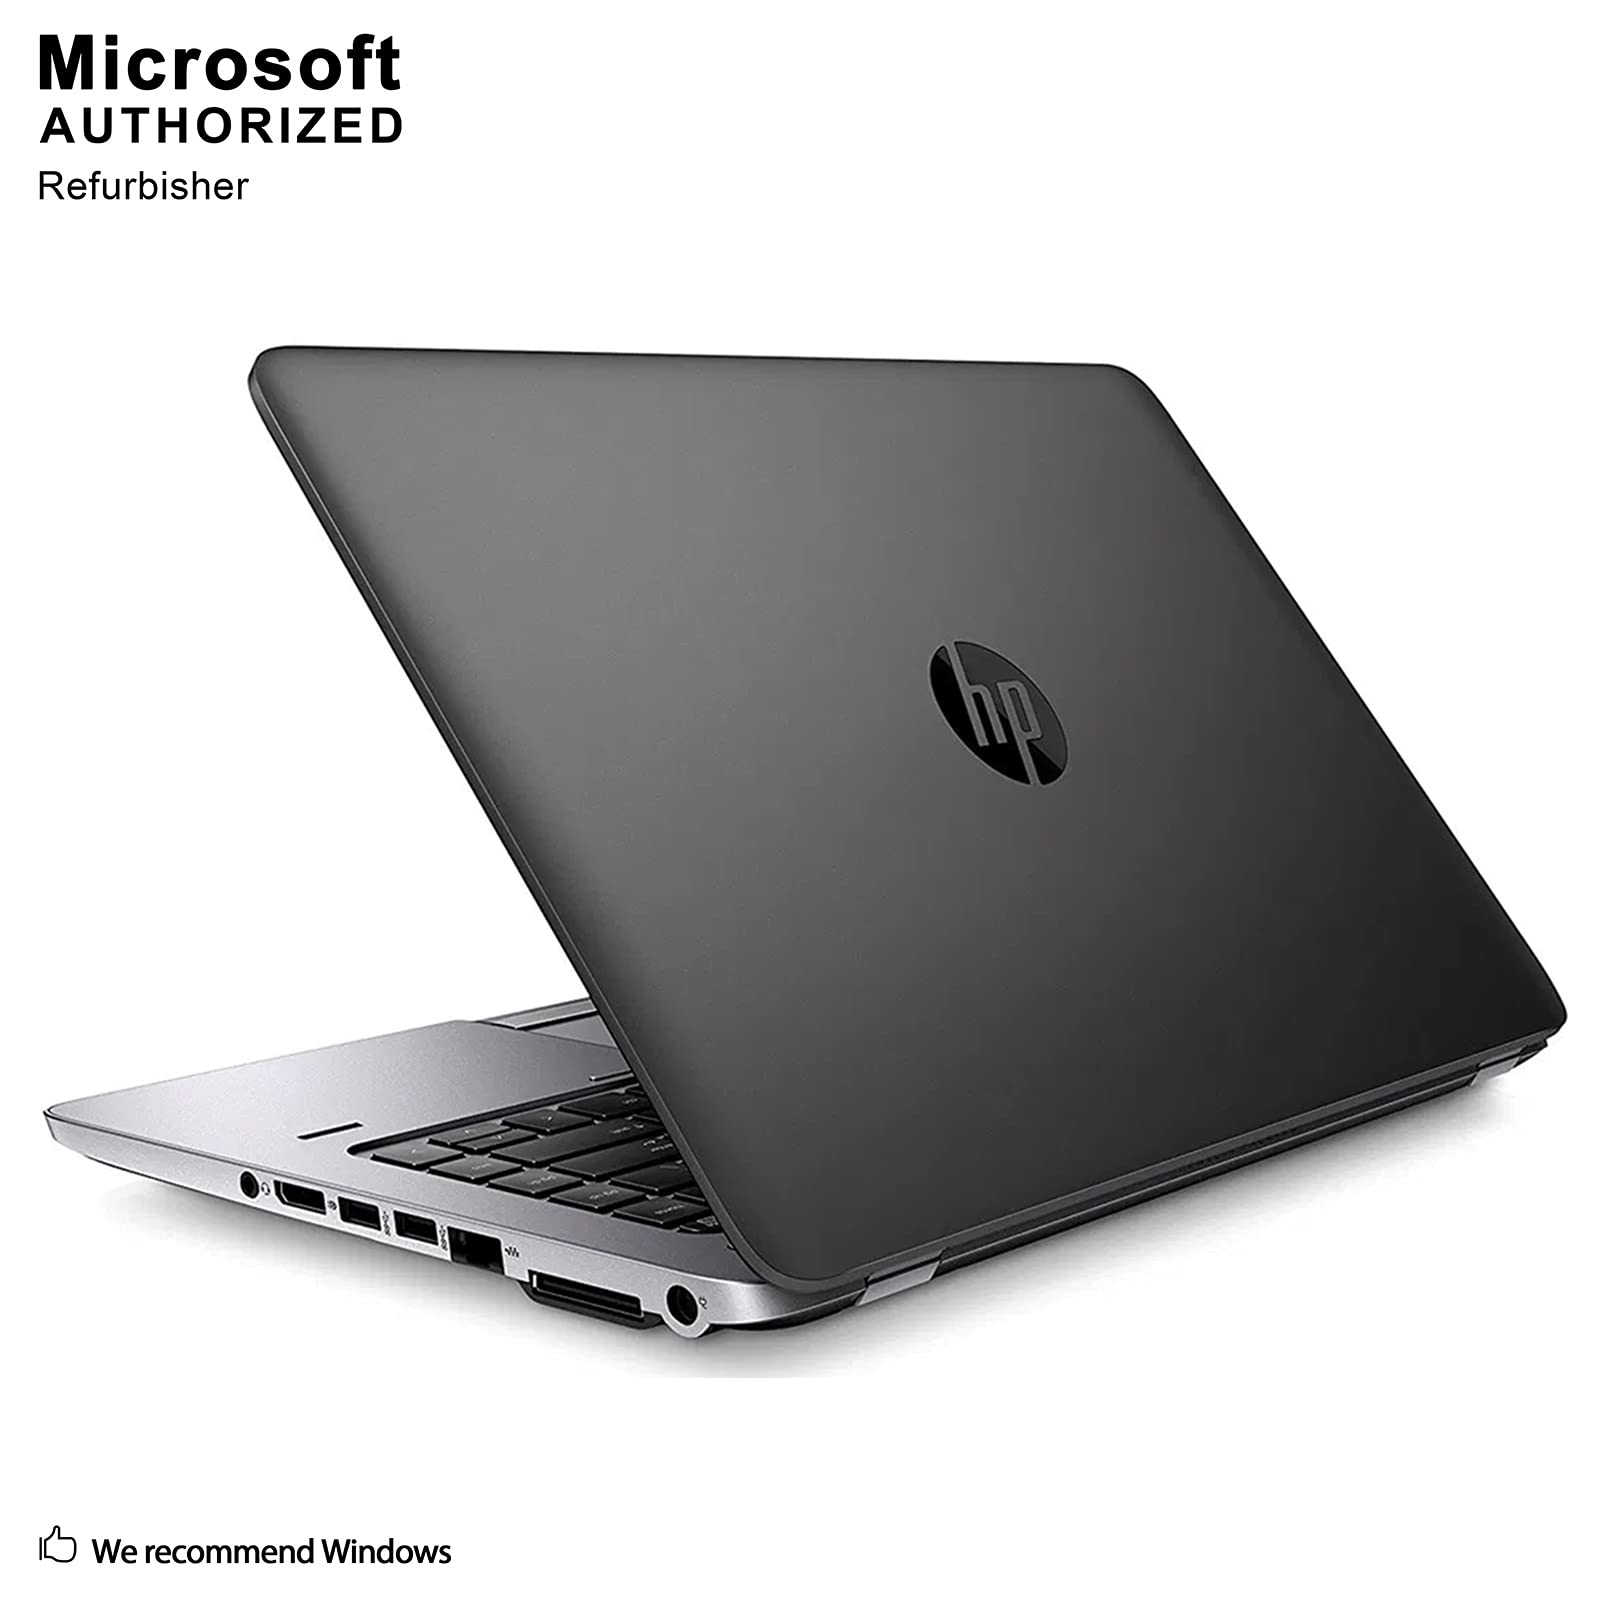 EliteBook 750 G2 Notebook PC